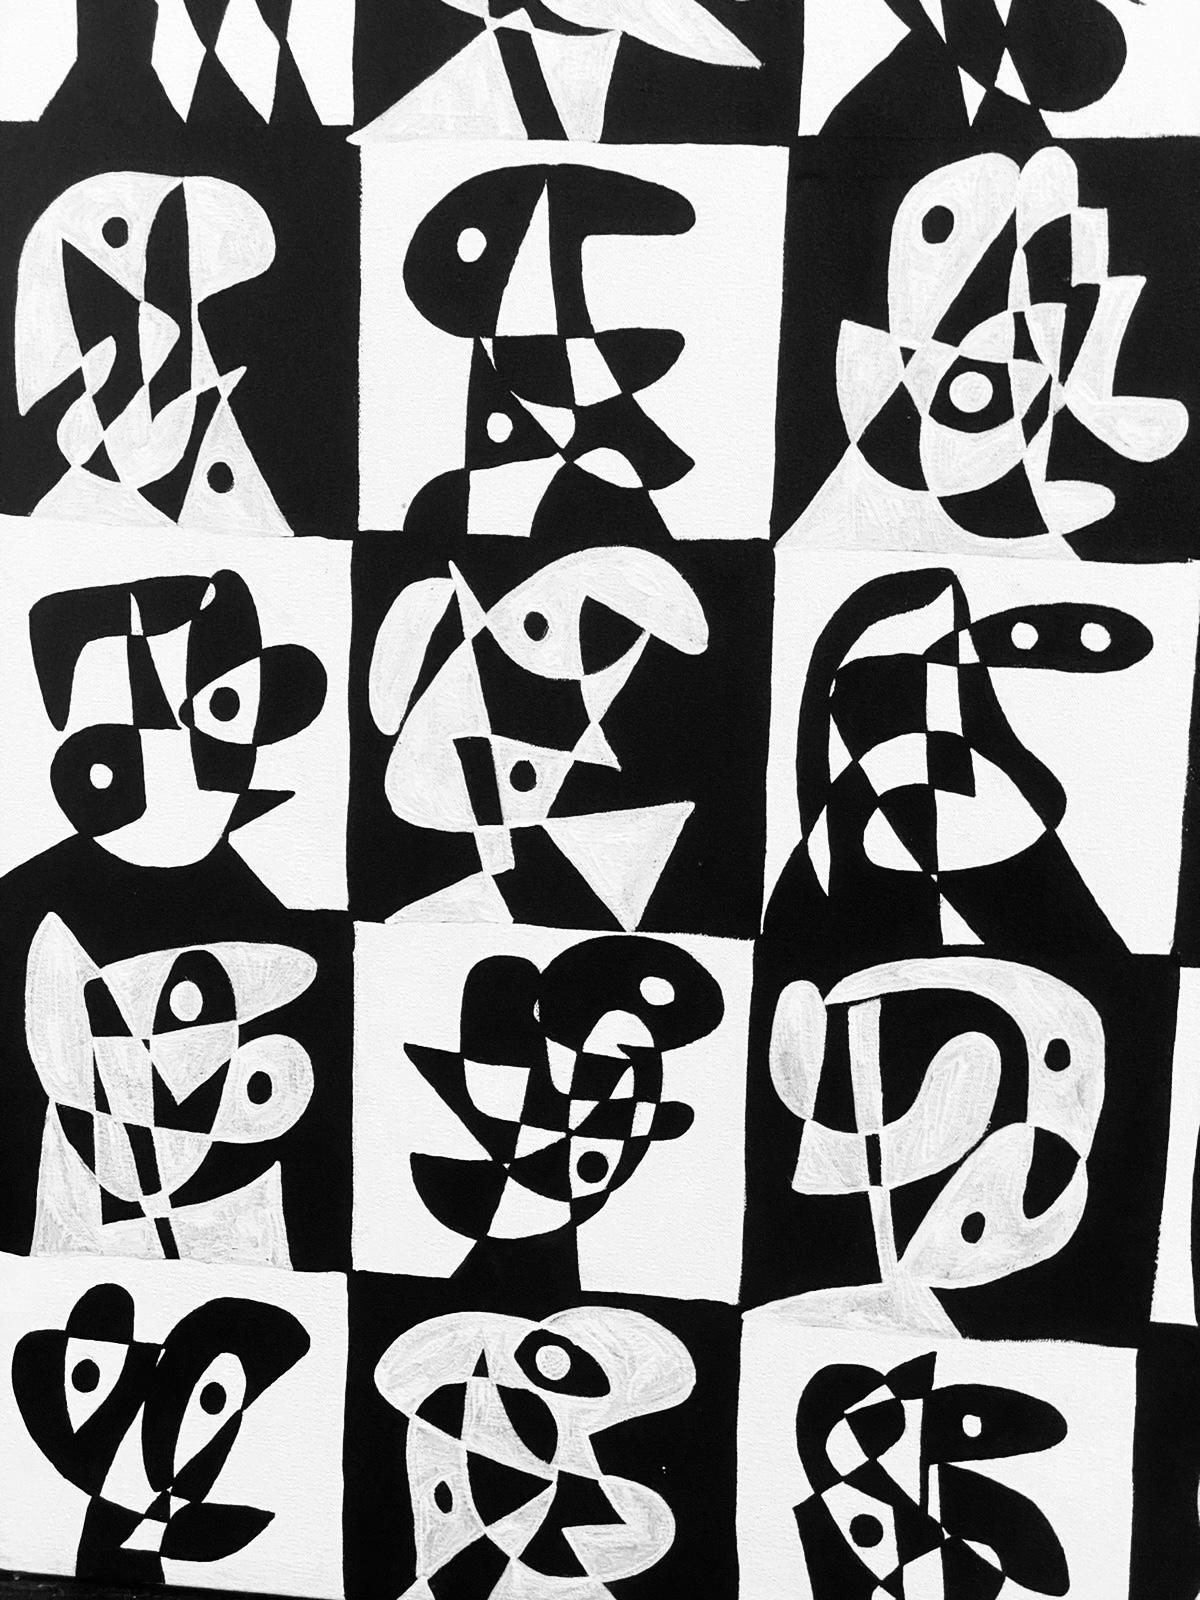 Contemporary Art, Abstract Painting
Acrylic on canvas
160x150cm
Signed 



About the artist
Enrique Pichardo (Mexico City, 1973) graduated from Escuela Nacional de Pintura, Escultura y Grabado (ENPEG) “La Esmeralda”. As a Mexican Contemporary